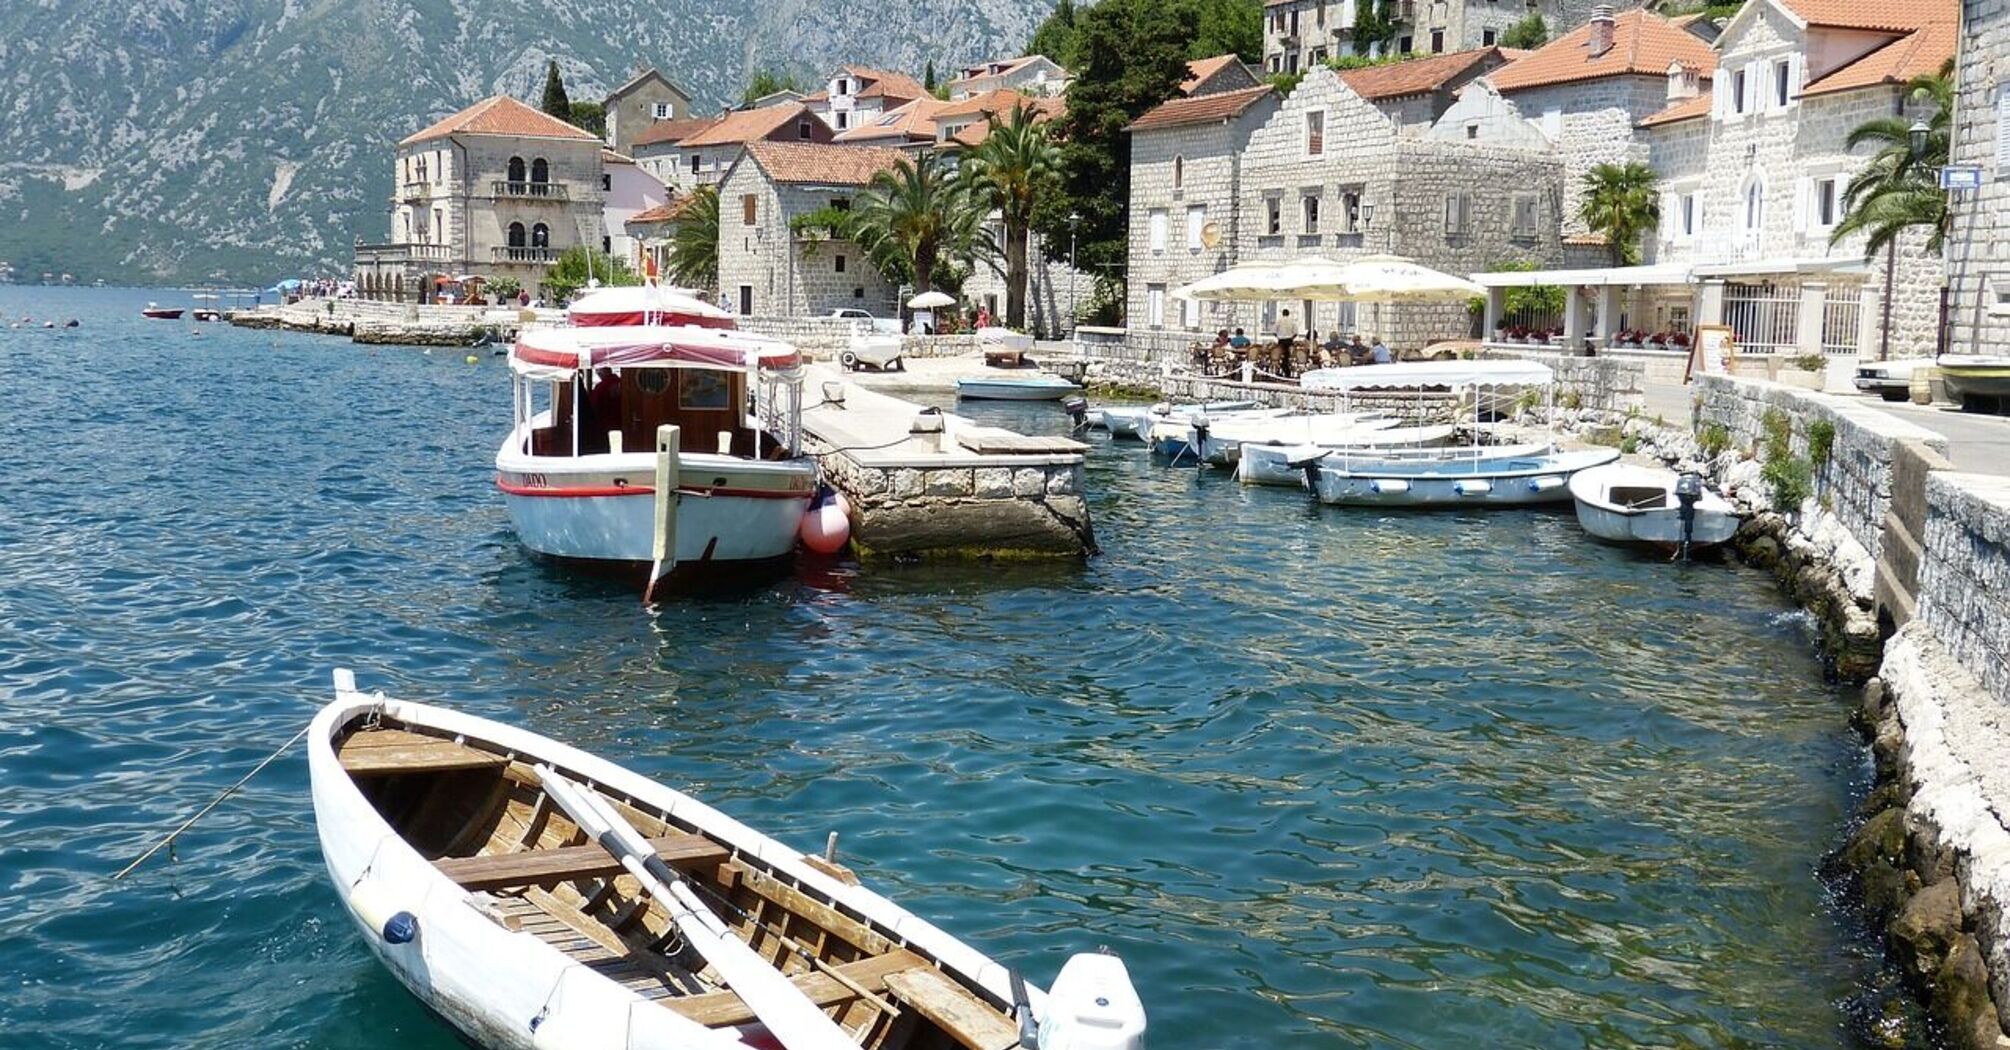 Hyatt makes its debut in Montenegro with the opening of Hyatt Regency Kotor Bay Resort